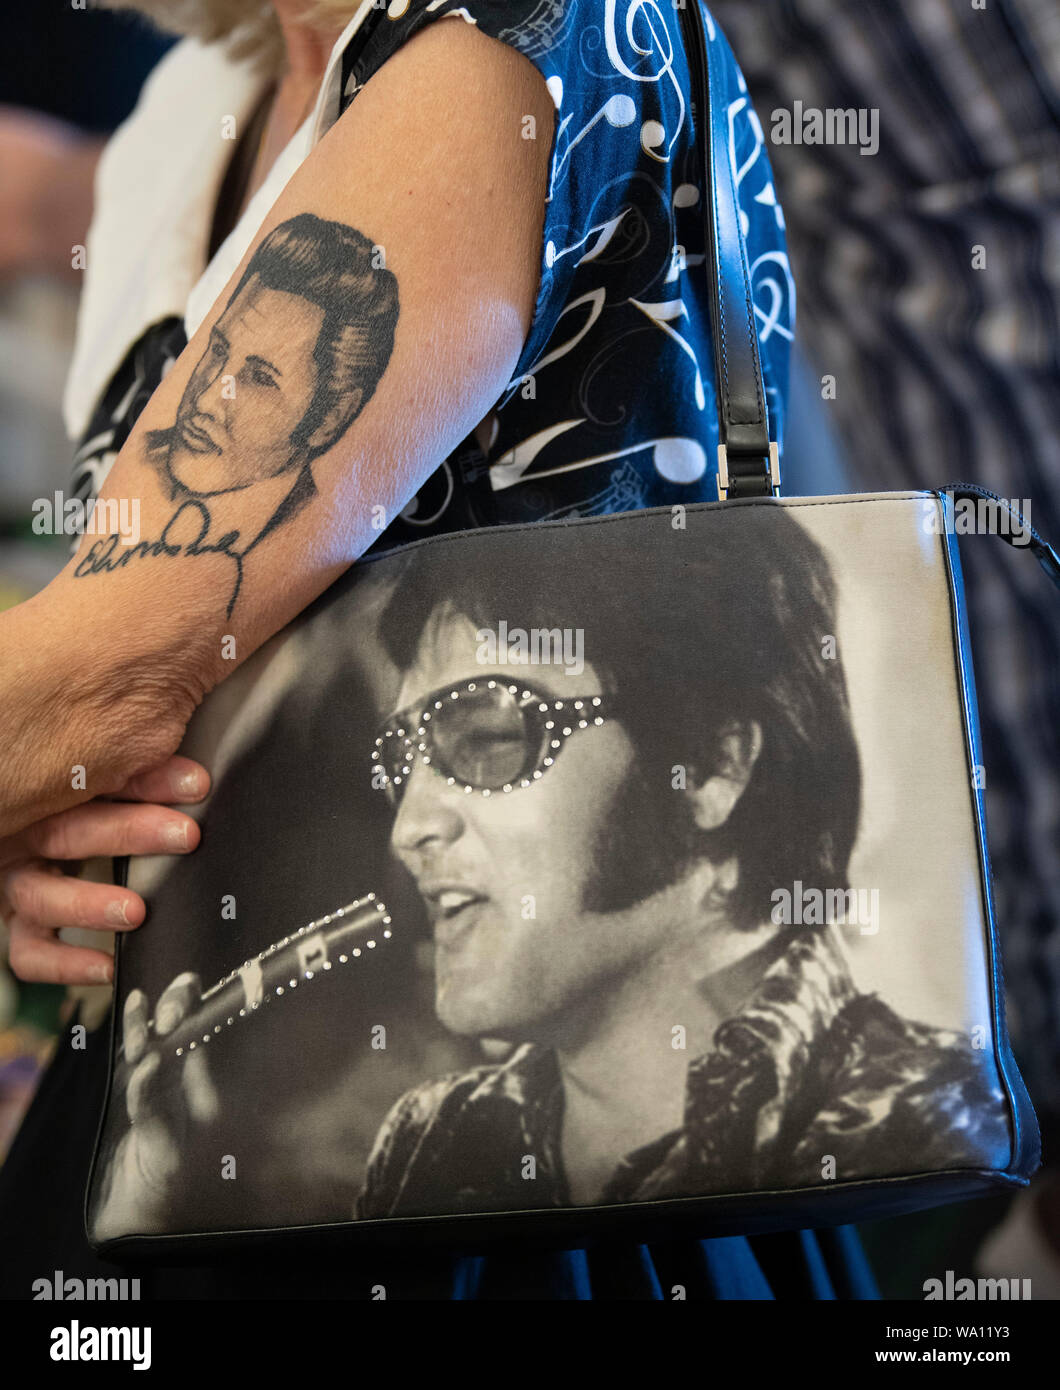 Elvis Presley Portrait Temporary Tattoo Sticker  OhMyTat